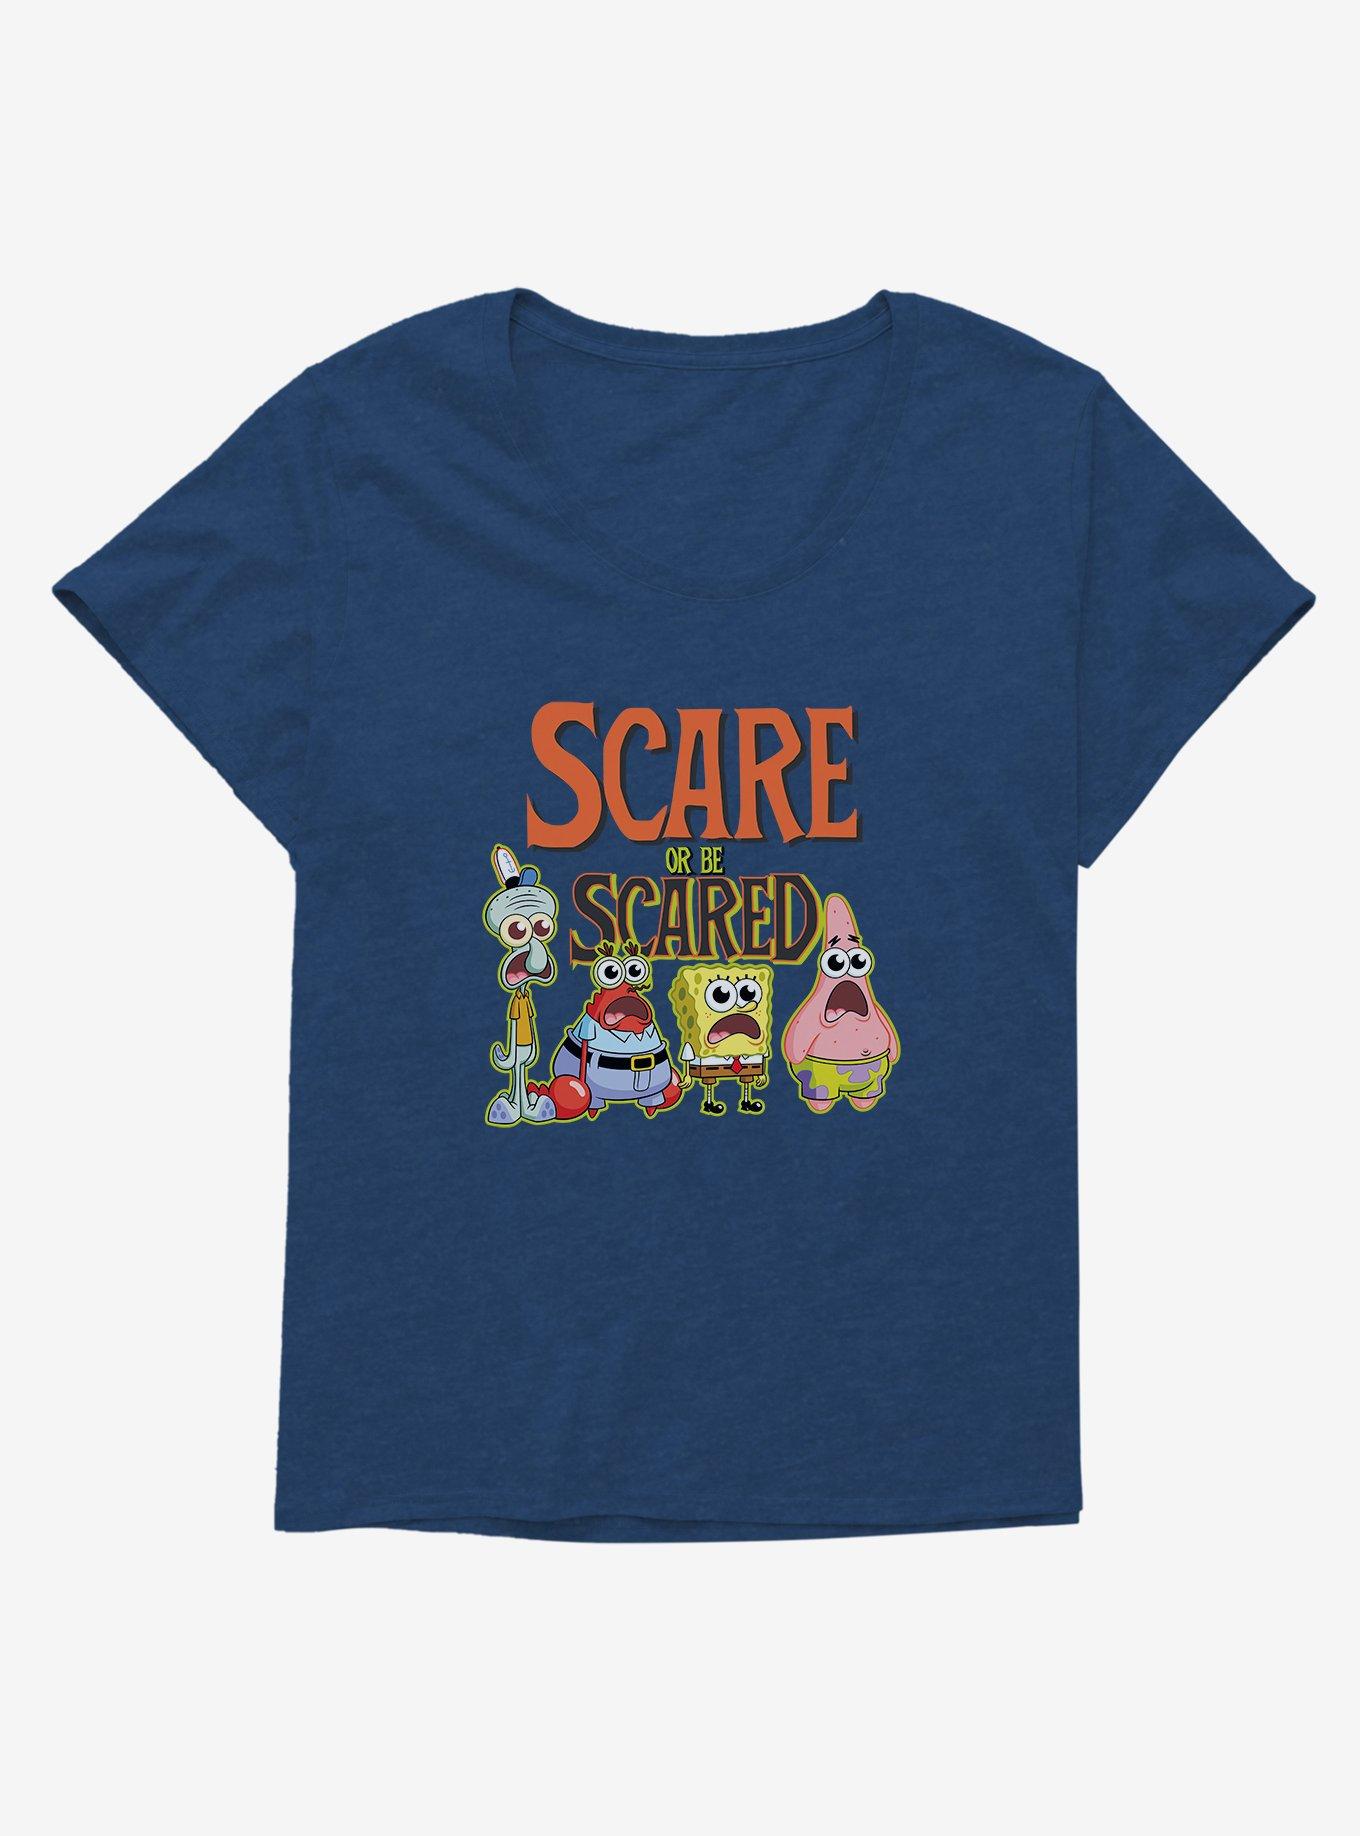 SpongeBob SquarePants Scare Or Be Scared Girls T-Shirt Plus